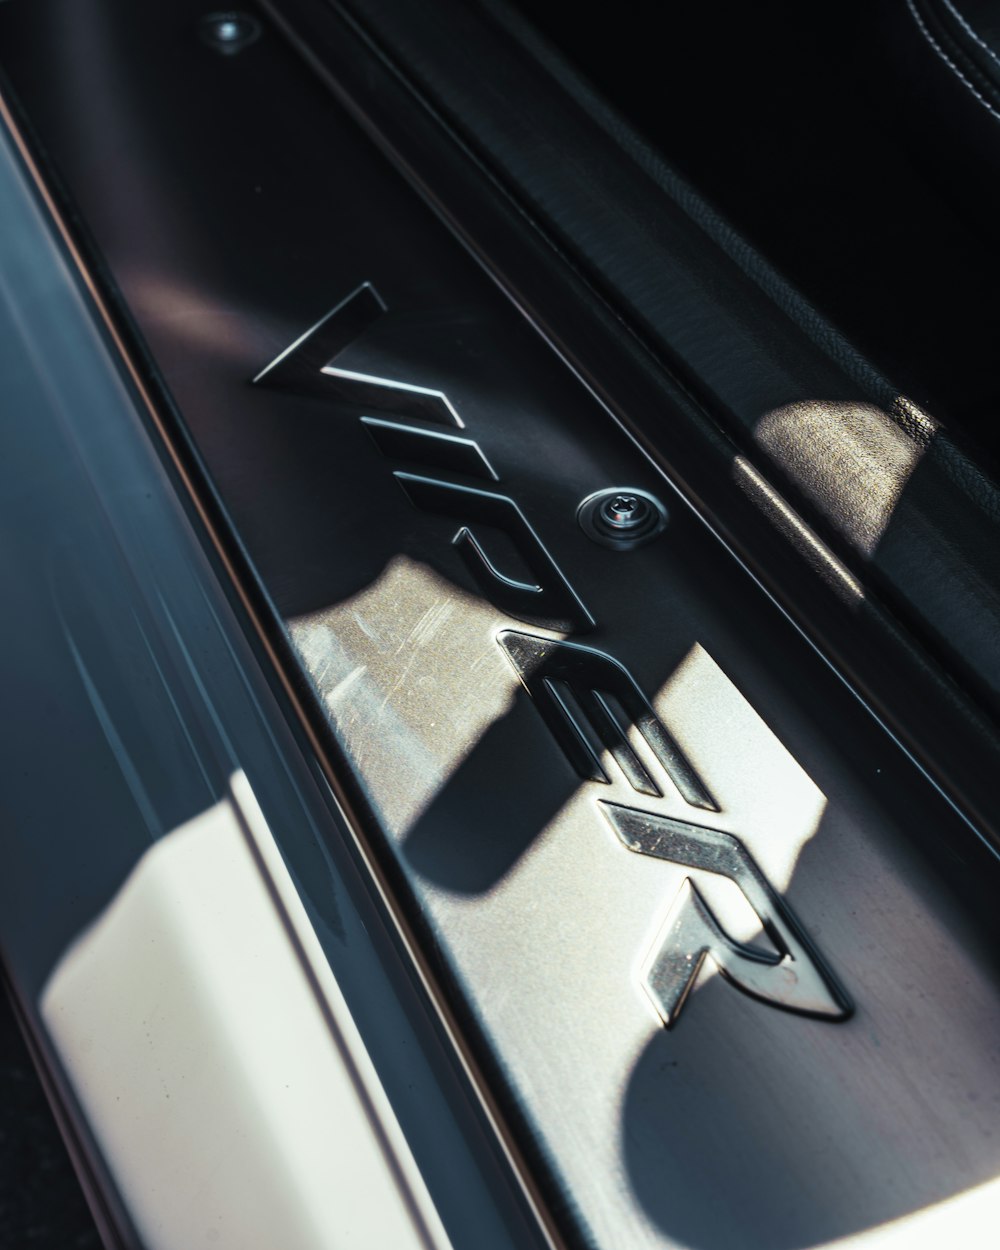 a close up of the door handle of a car